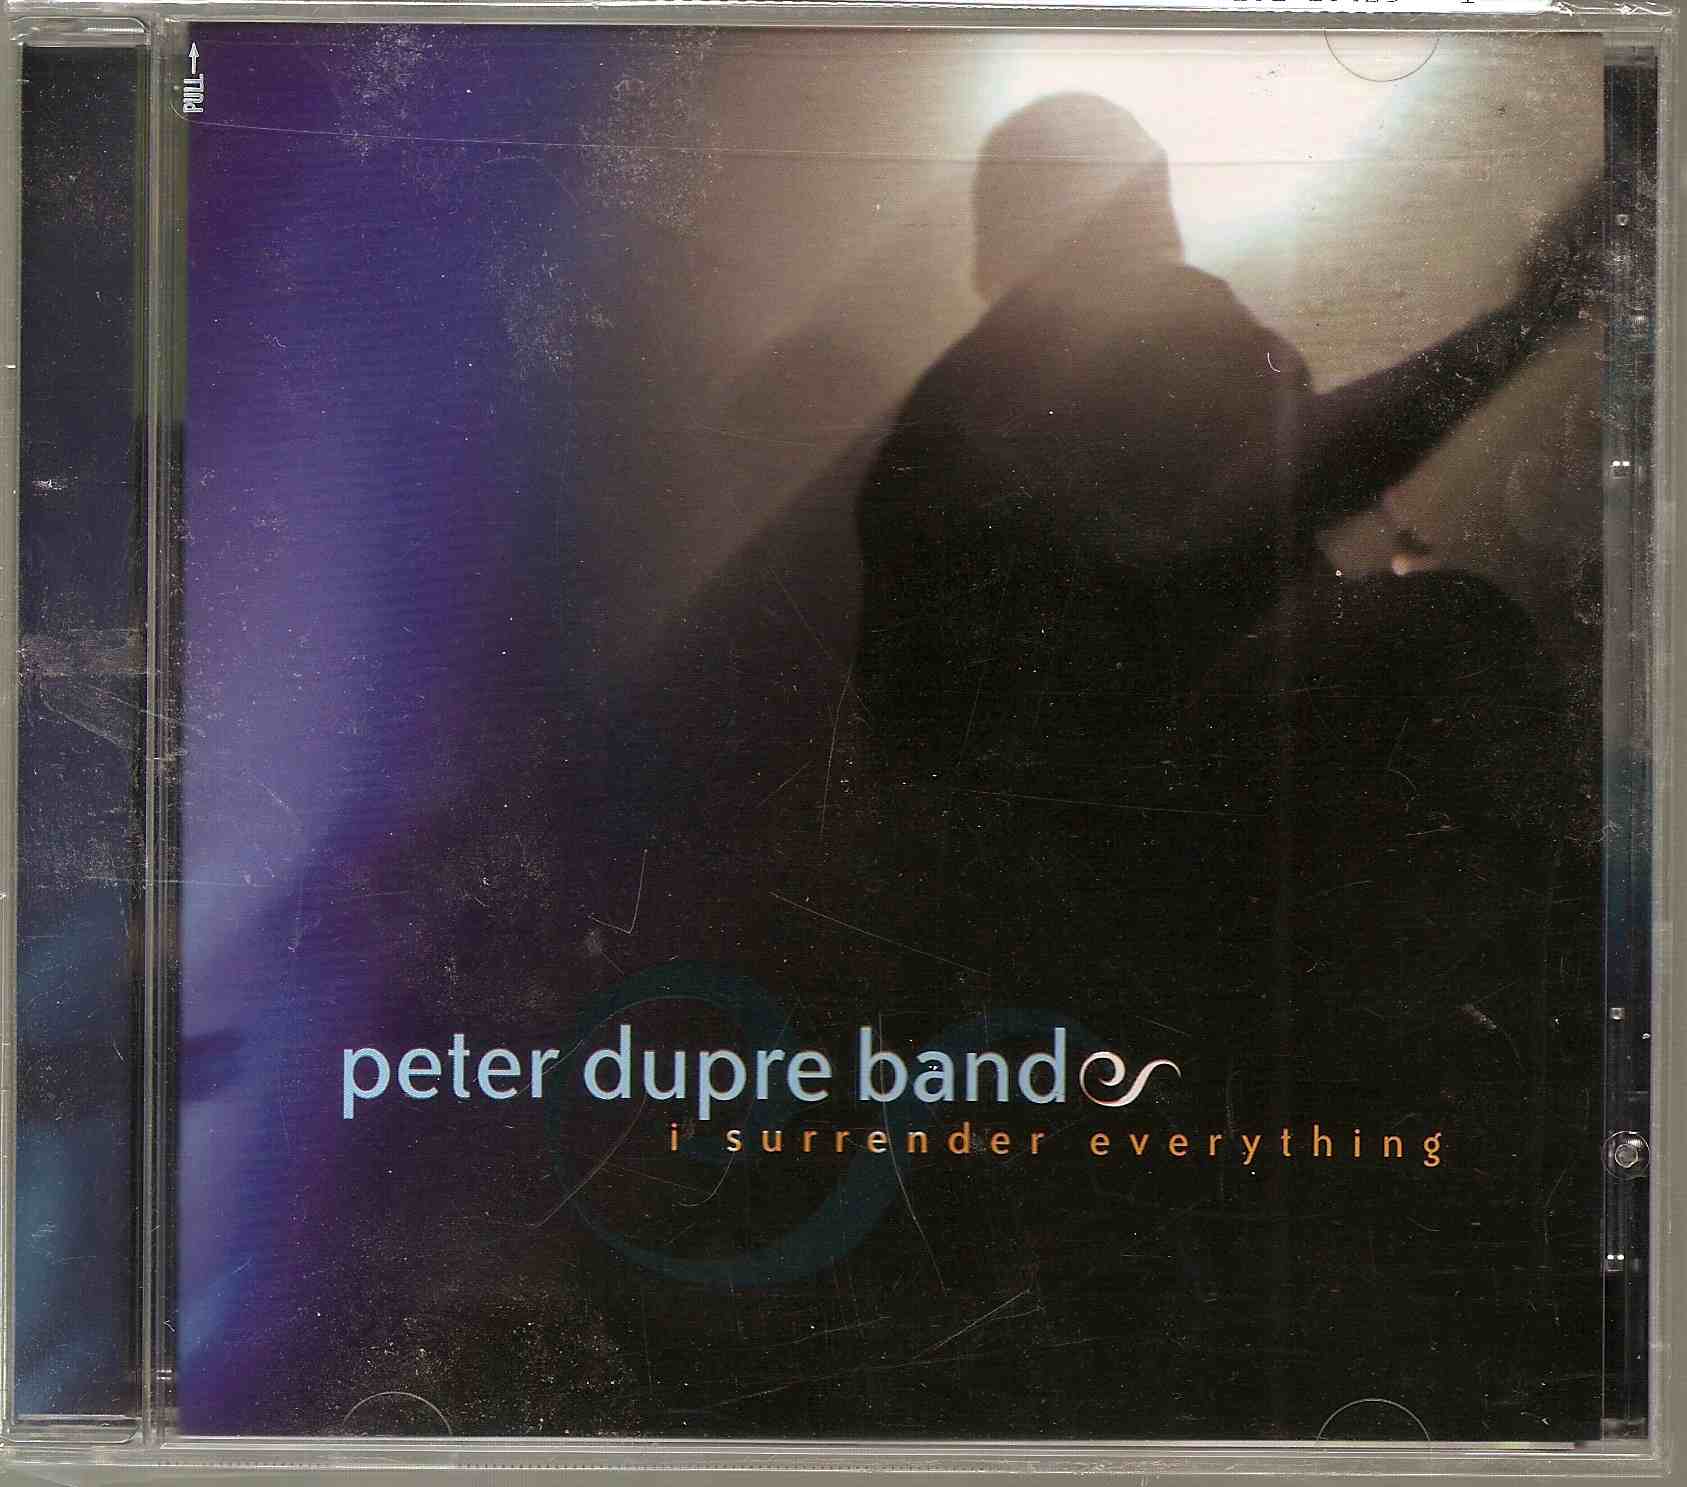 Peter Dupre Band "I surrender Everything" English Worship CD